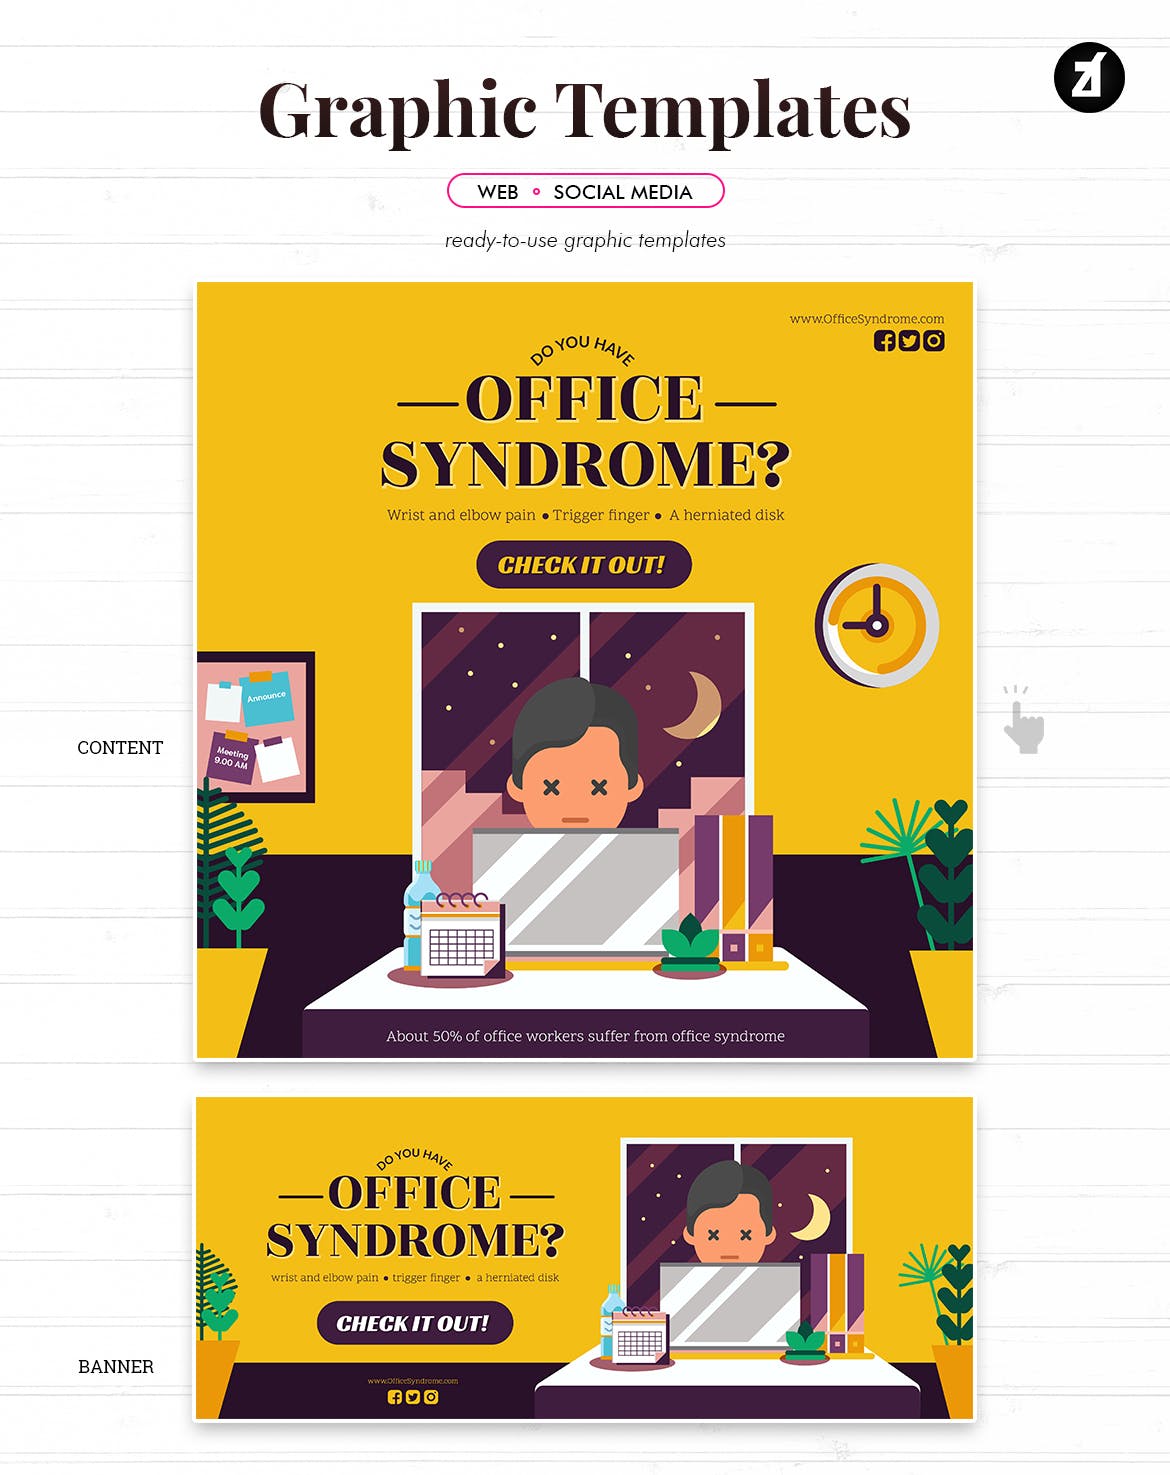 办公室综合症主题矢量插画素材 Office syndrome graphic templates插图(2)